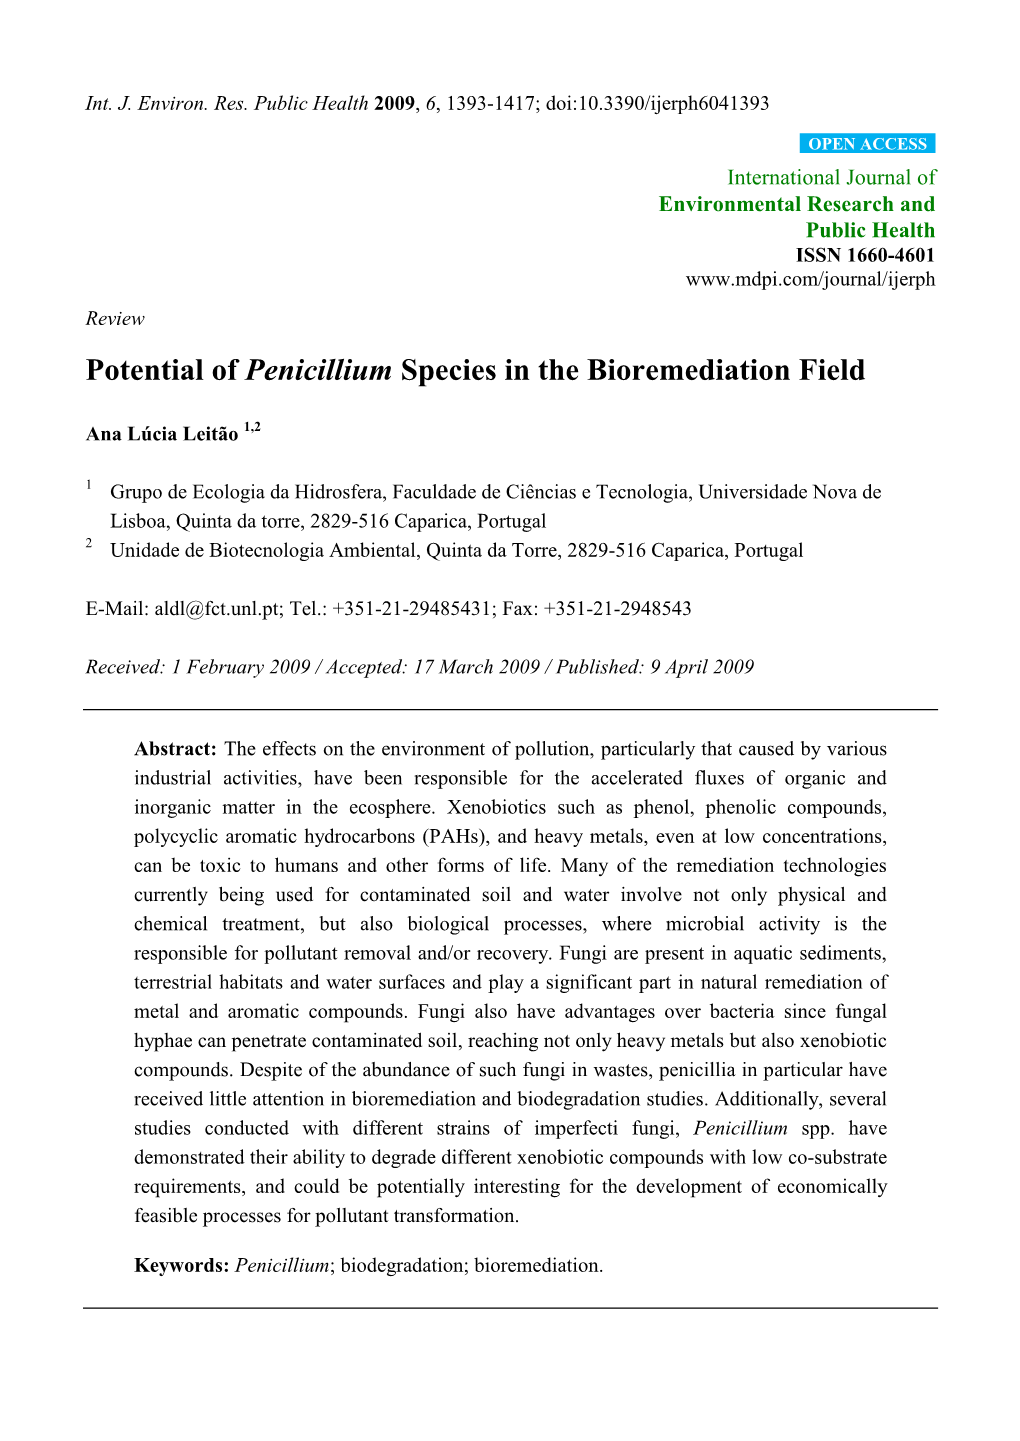 Potential of Penicillium Species in the Bioremediation Field